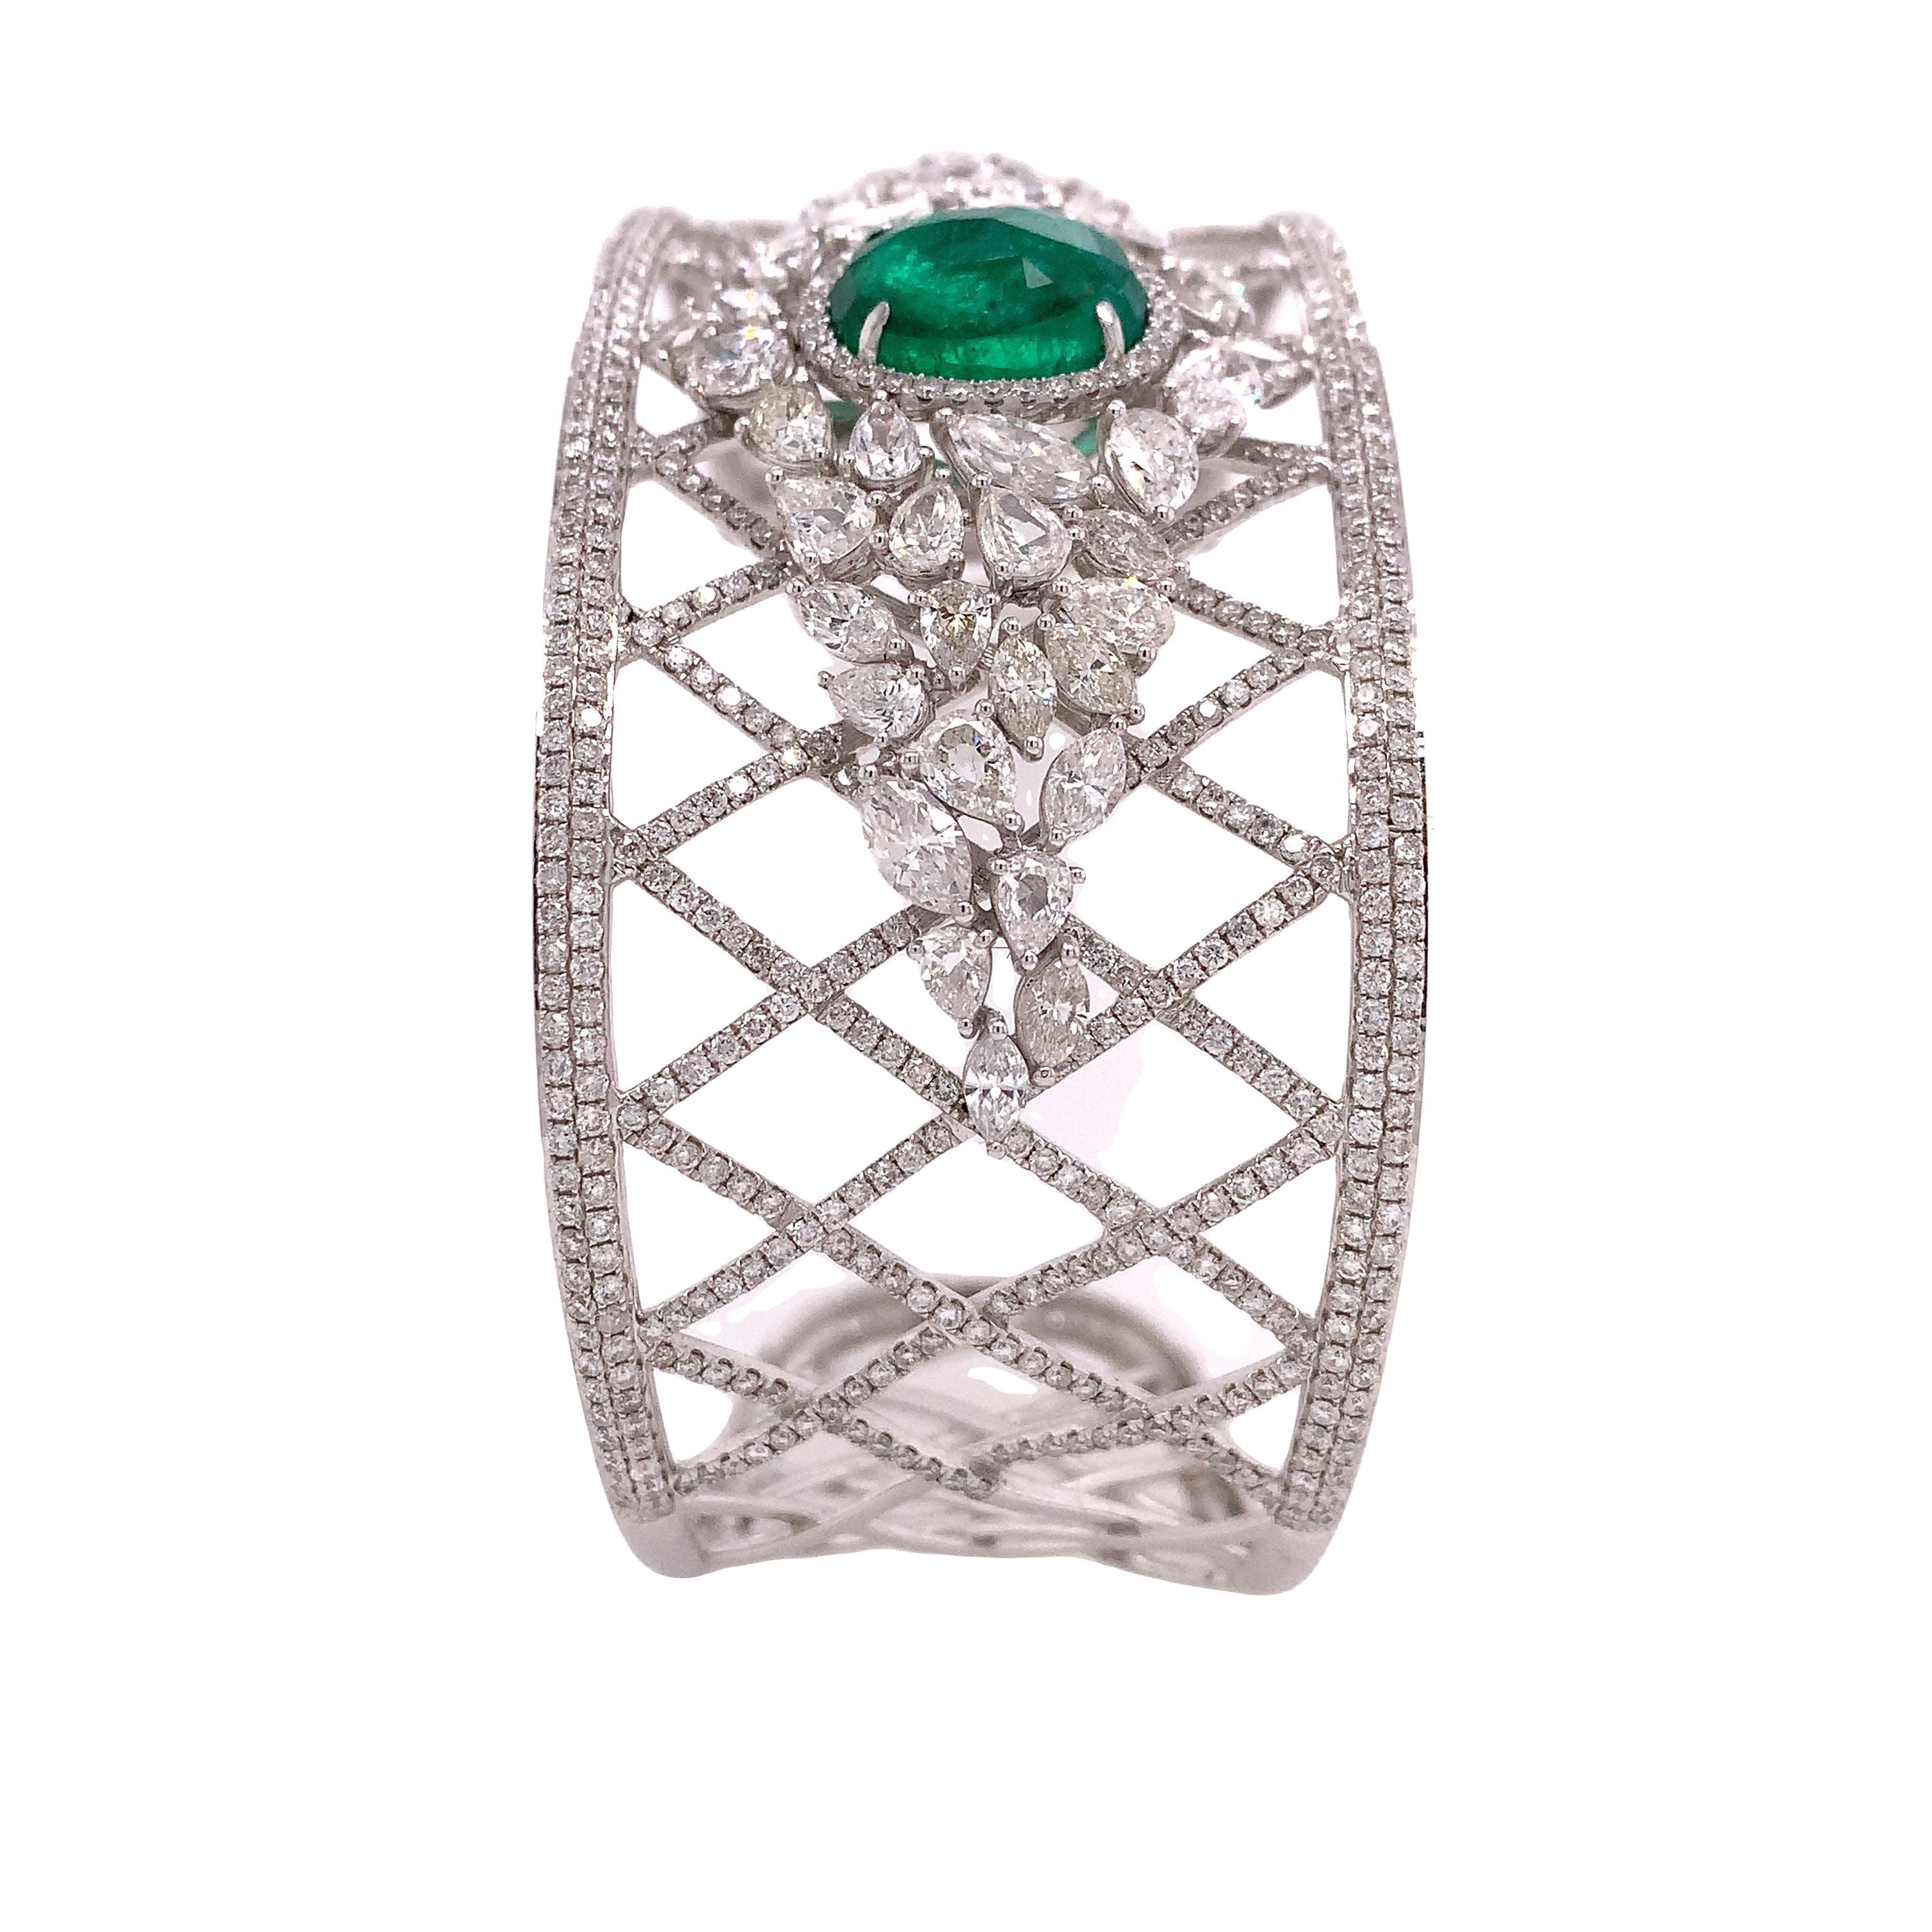 18K White Gold
Emerald: 4.76ct total weight
Diamond: 12.31ct total weight
All diamonds are G-H/SI stones.
